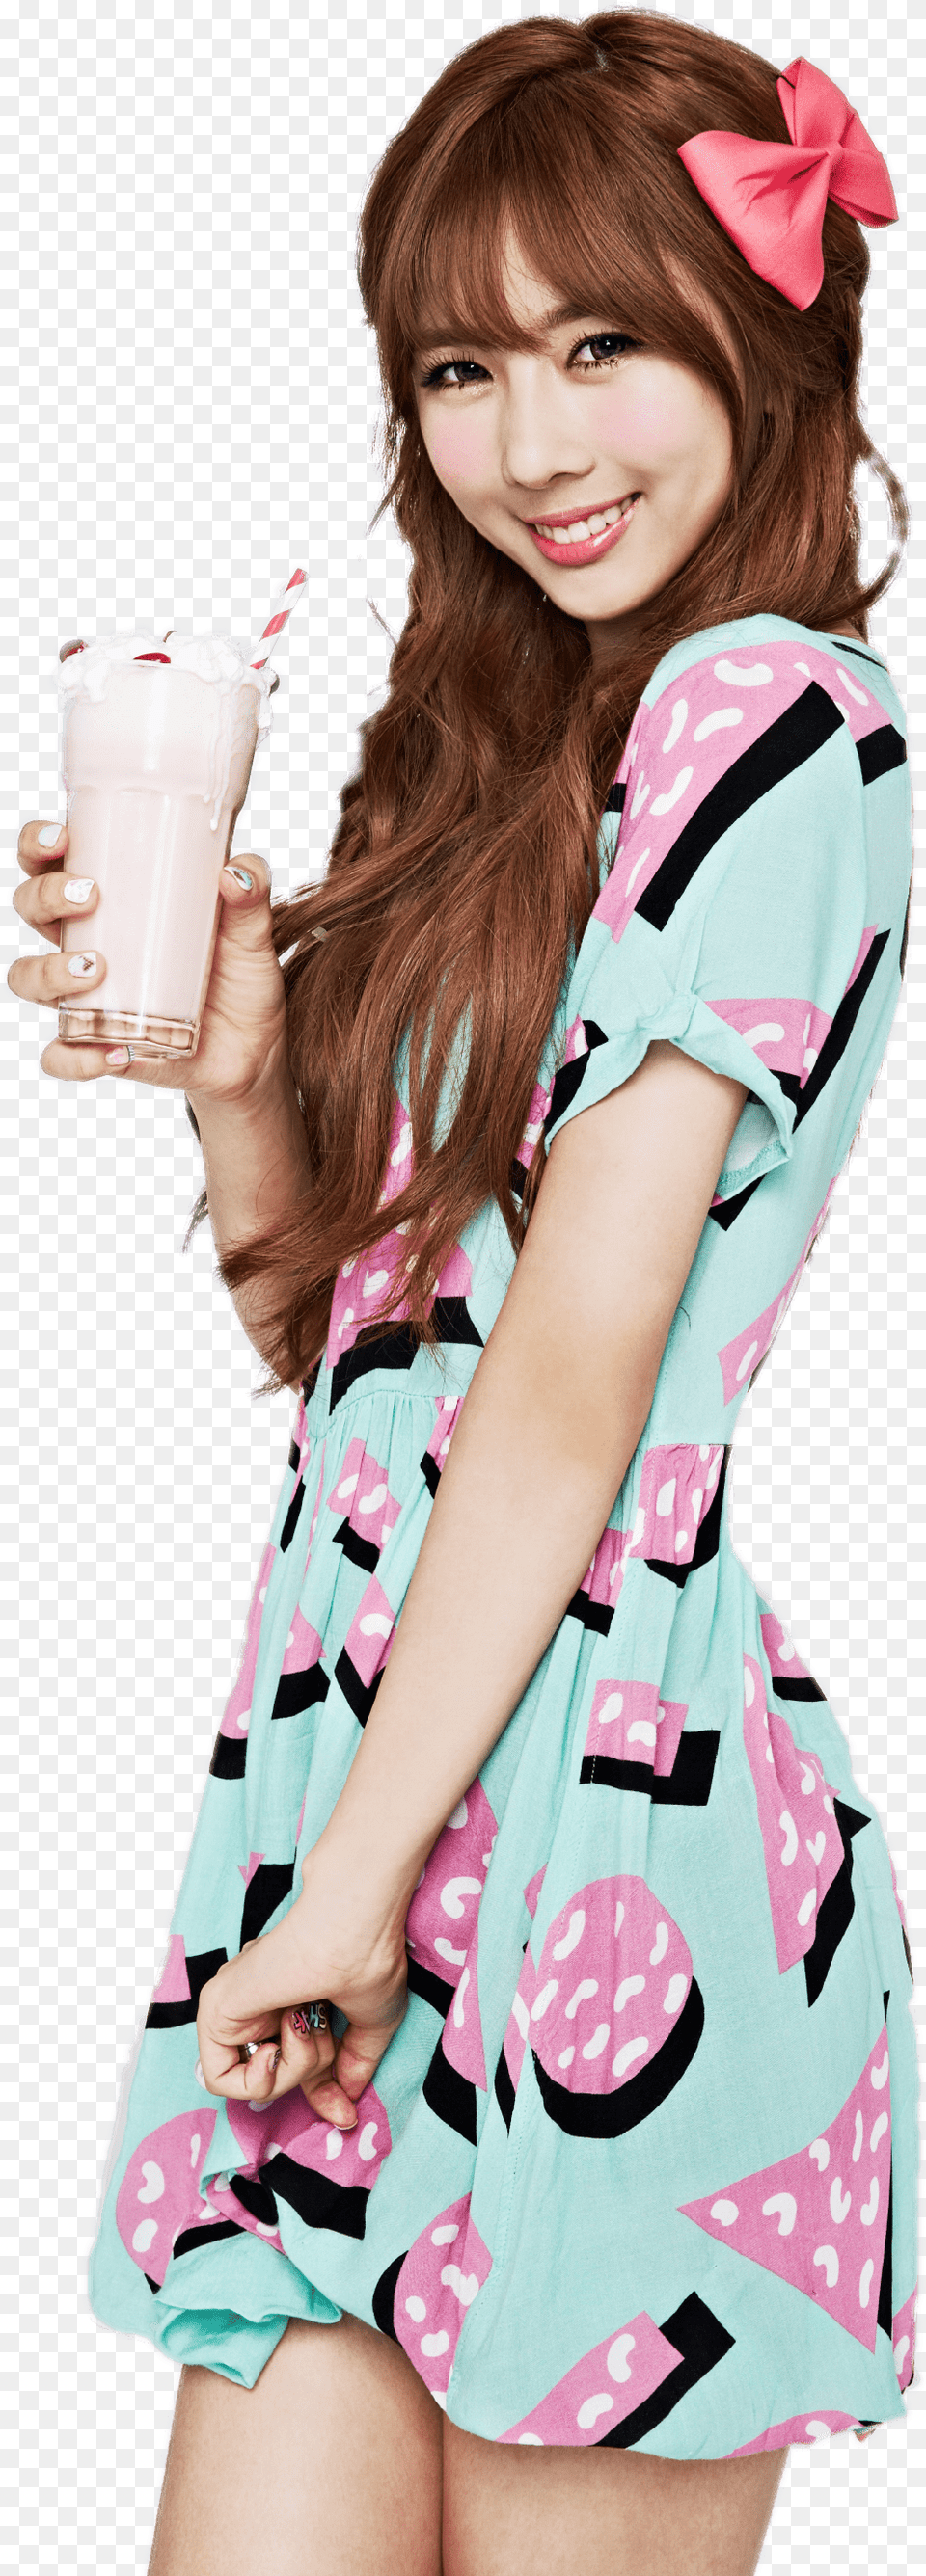 Dreamcatcher Yoohyeon Love Shake Promo Clip Arts Minx Teaser Love Shake, Clothing, Dress, Beverage, Milk Free Transparent Png